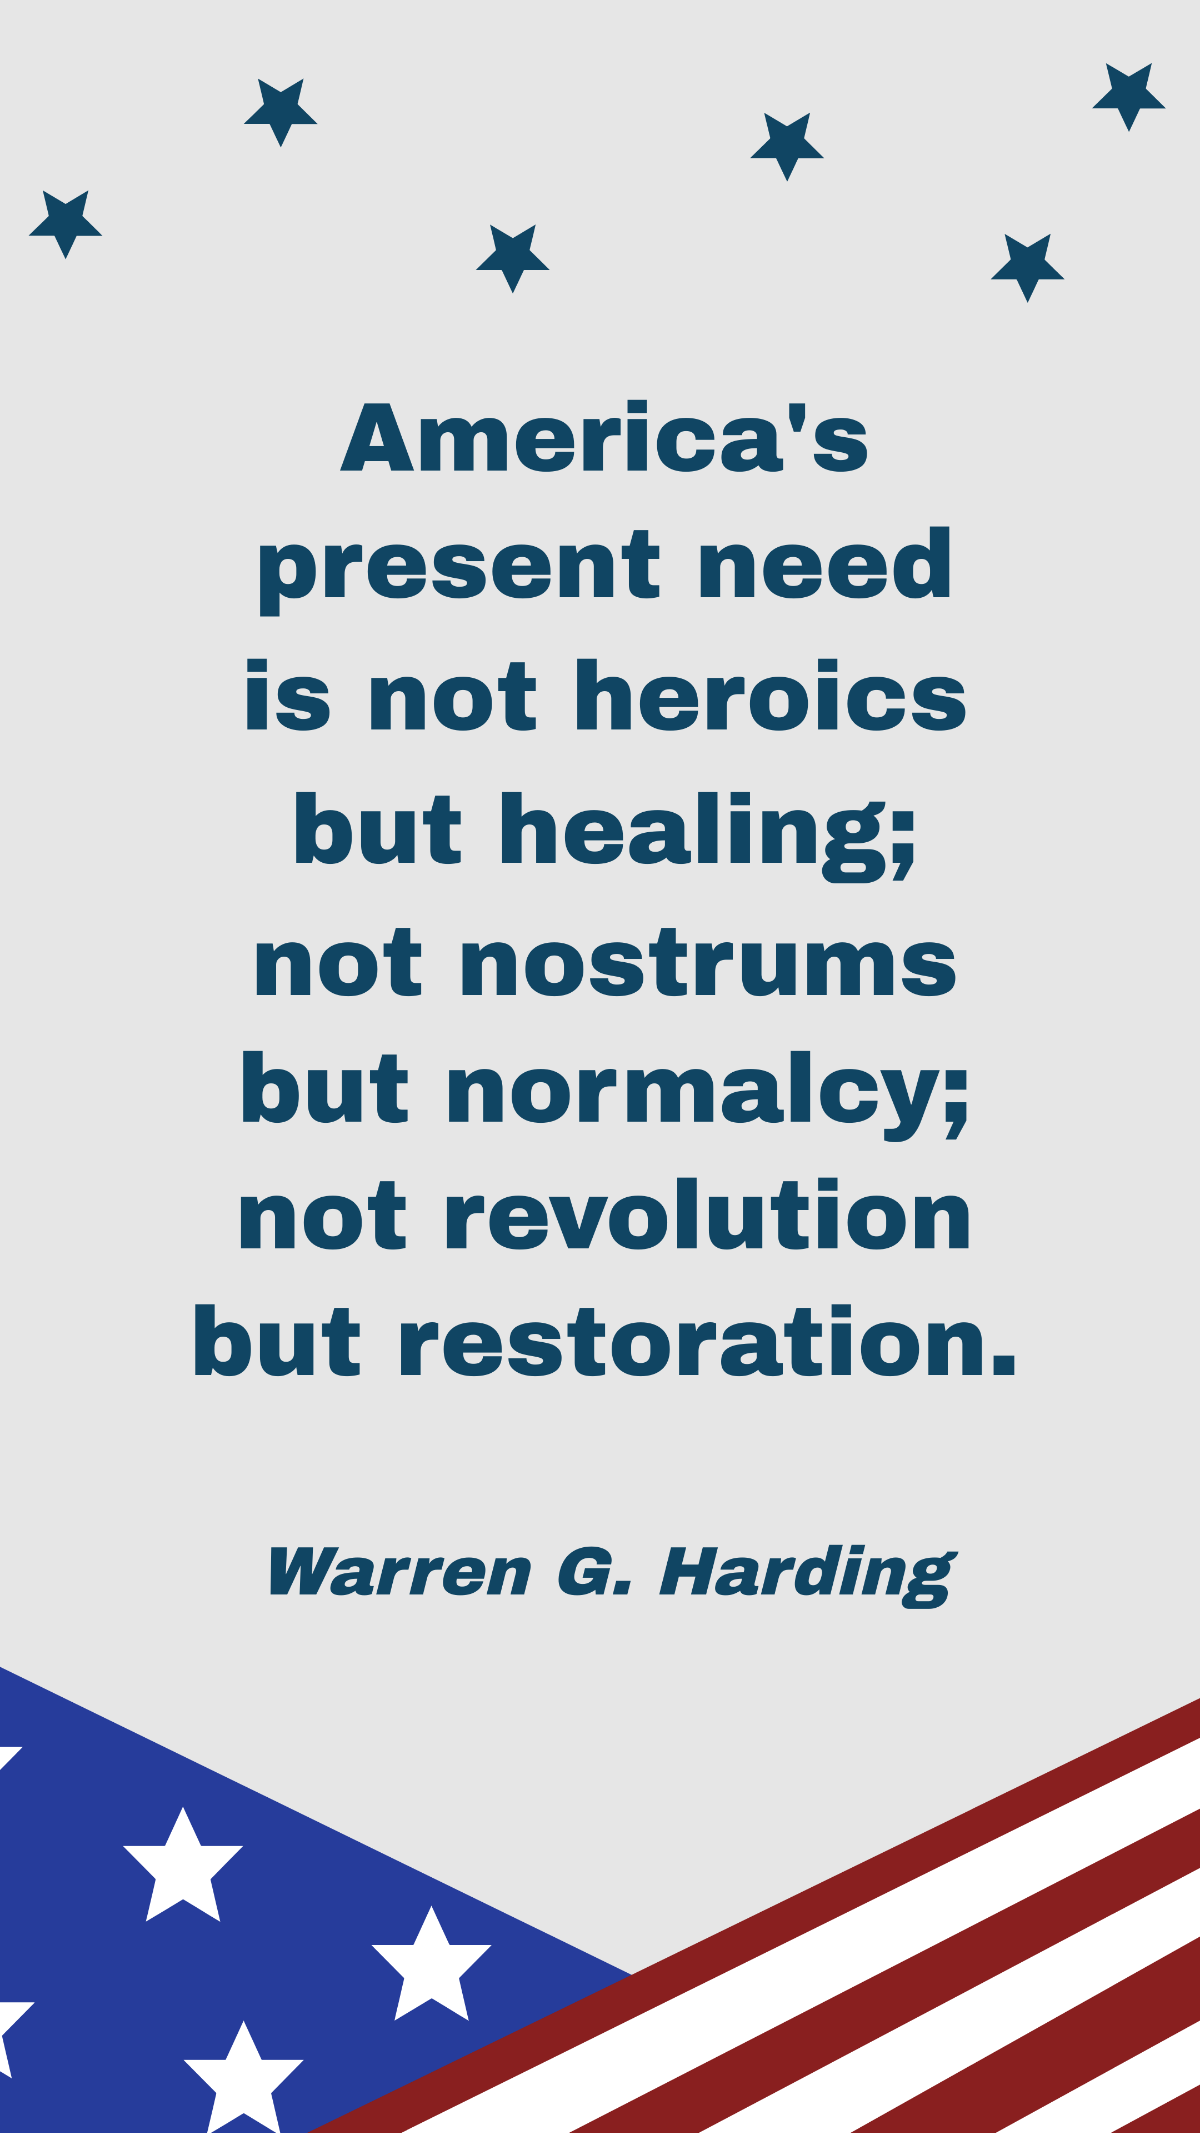 Warren G. Harding - America's present need is not heroics but healing; not nostrums but normalcy; not revolution but restoration.